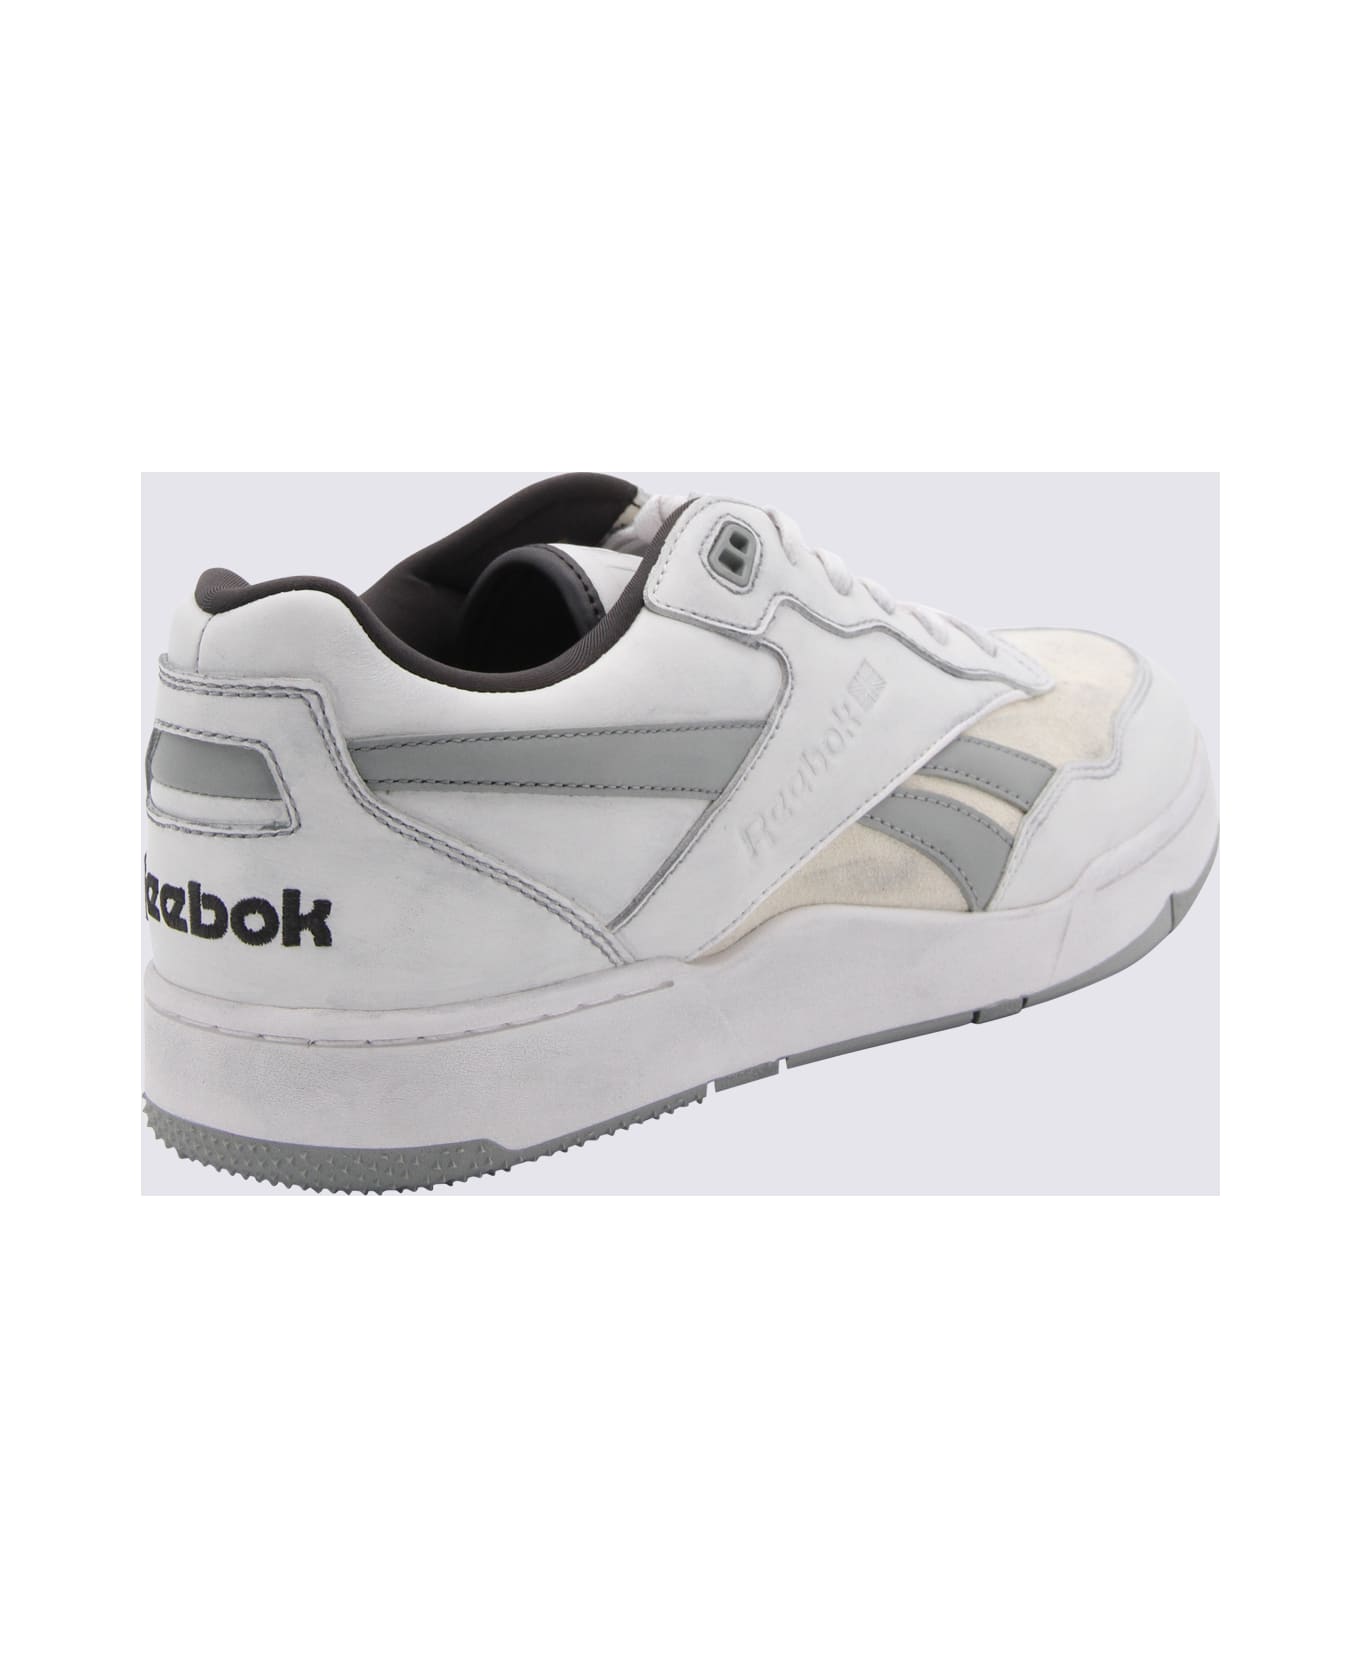 Reebok White Leather Sneakers - White スニーカー